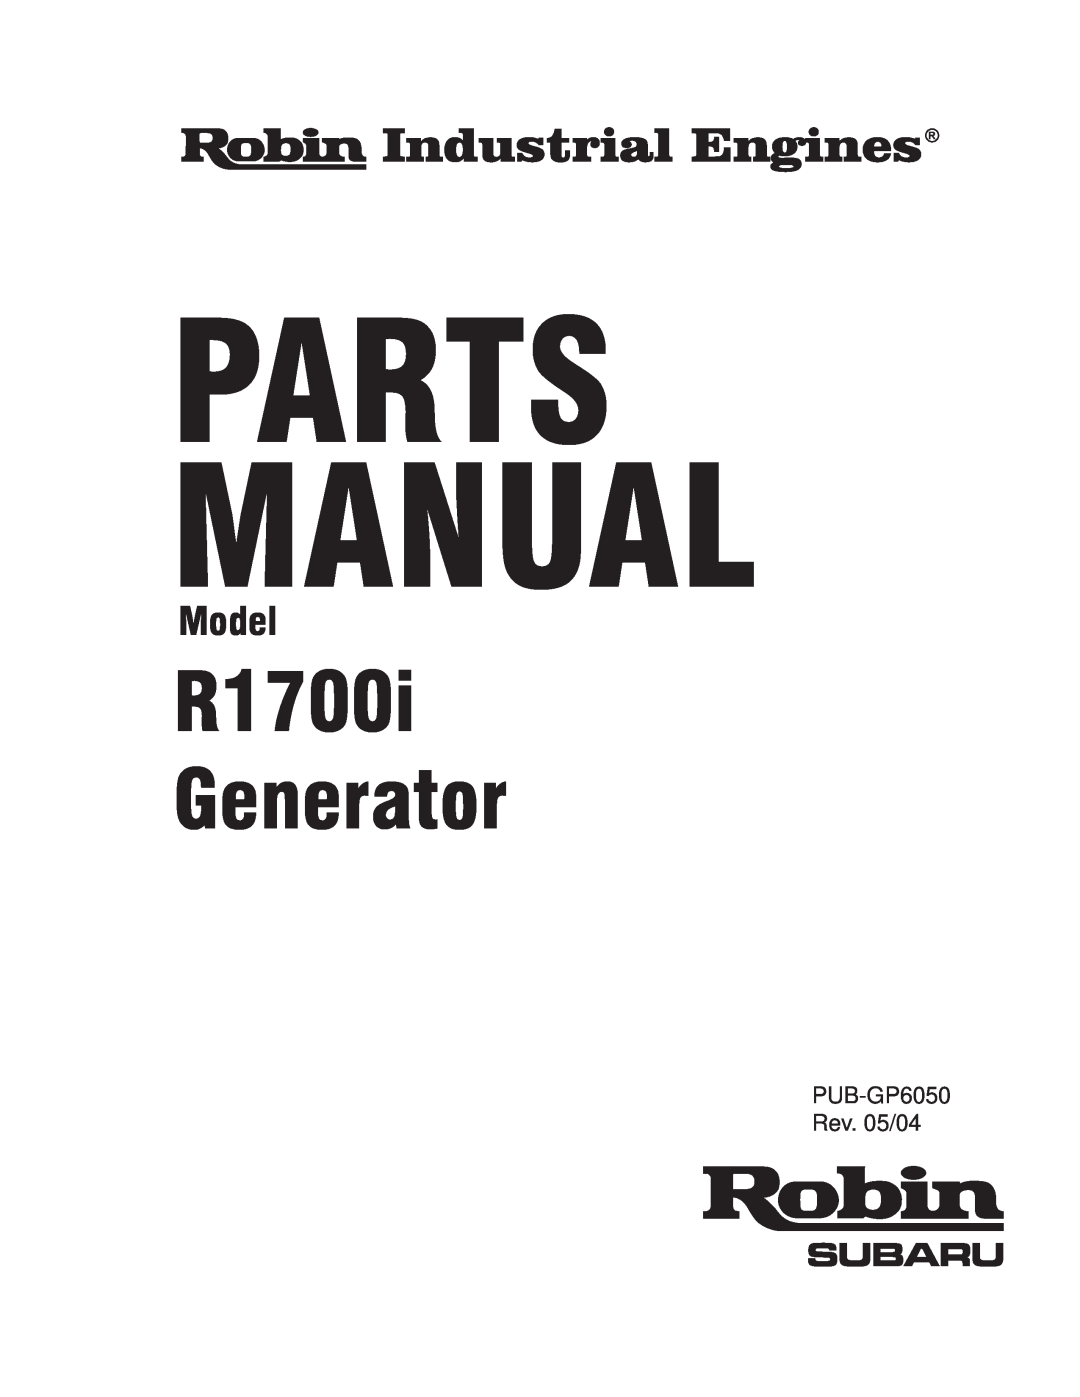 Subaru Robin Power Products manual Parts Manual, R1700i Generator, Model, PUB-GP6050Rev. 05/04 